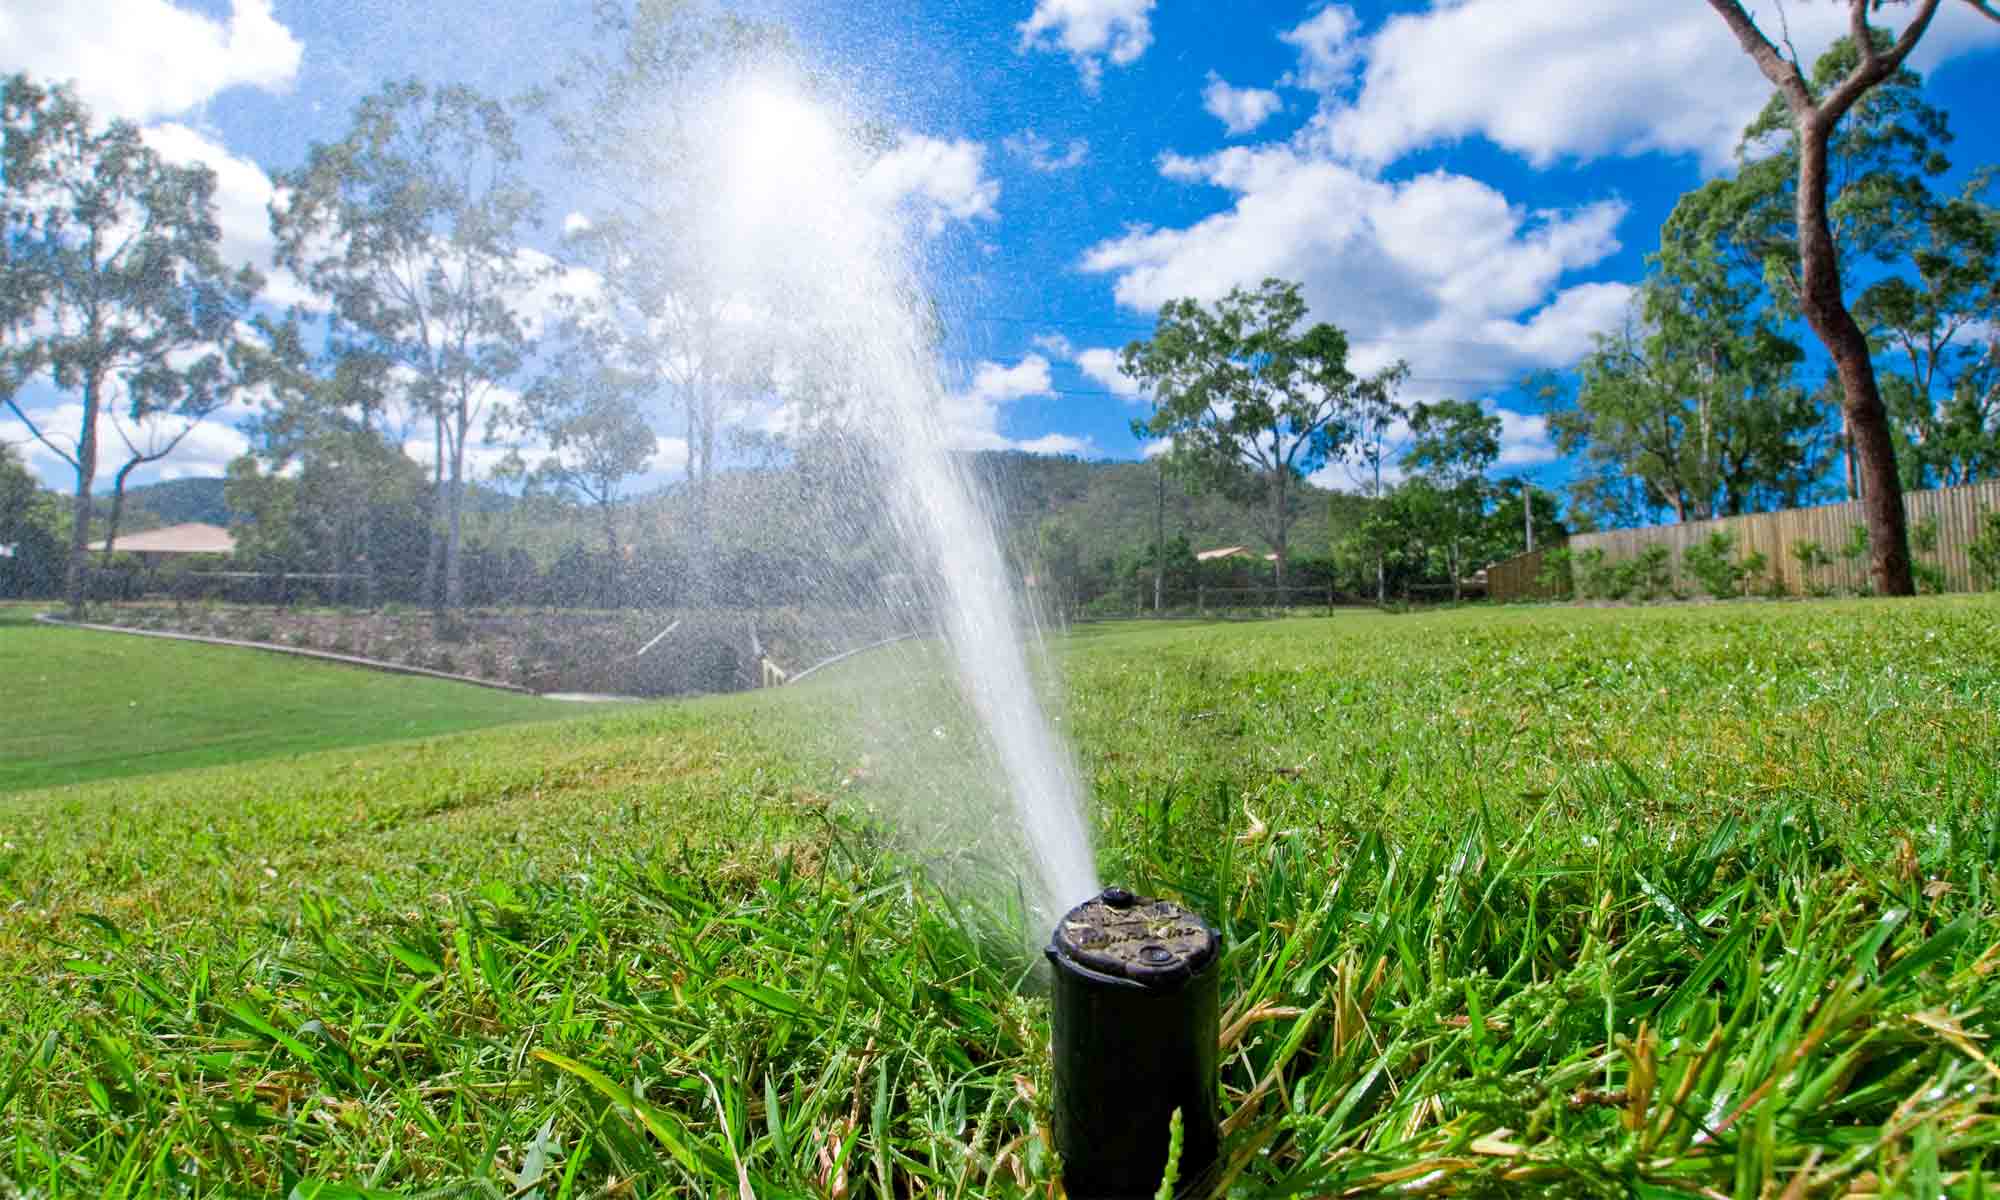 YardTech Lawn Sprinkler Systems